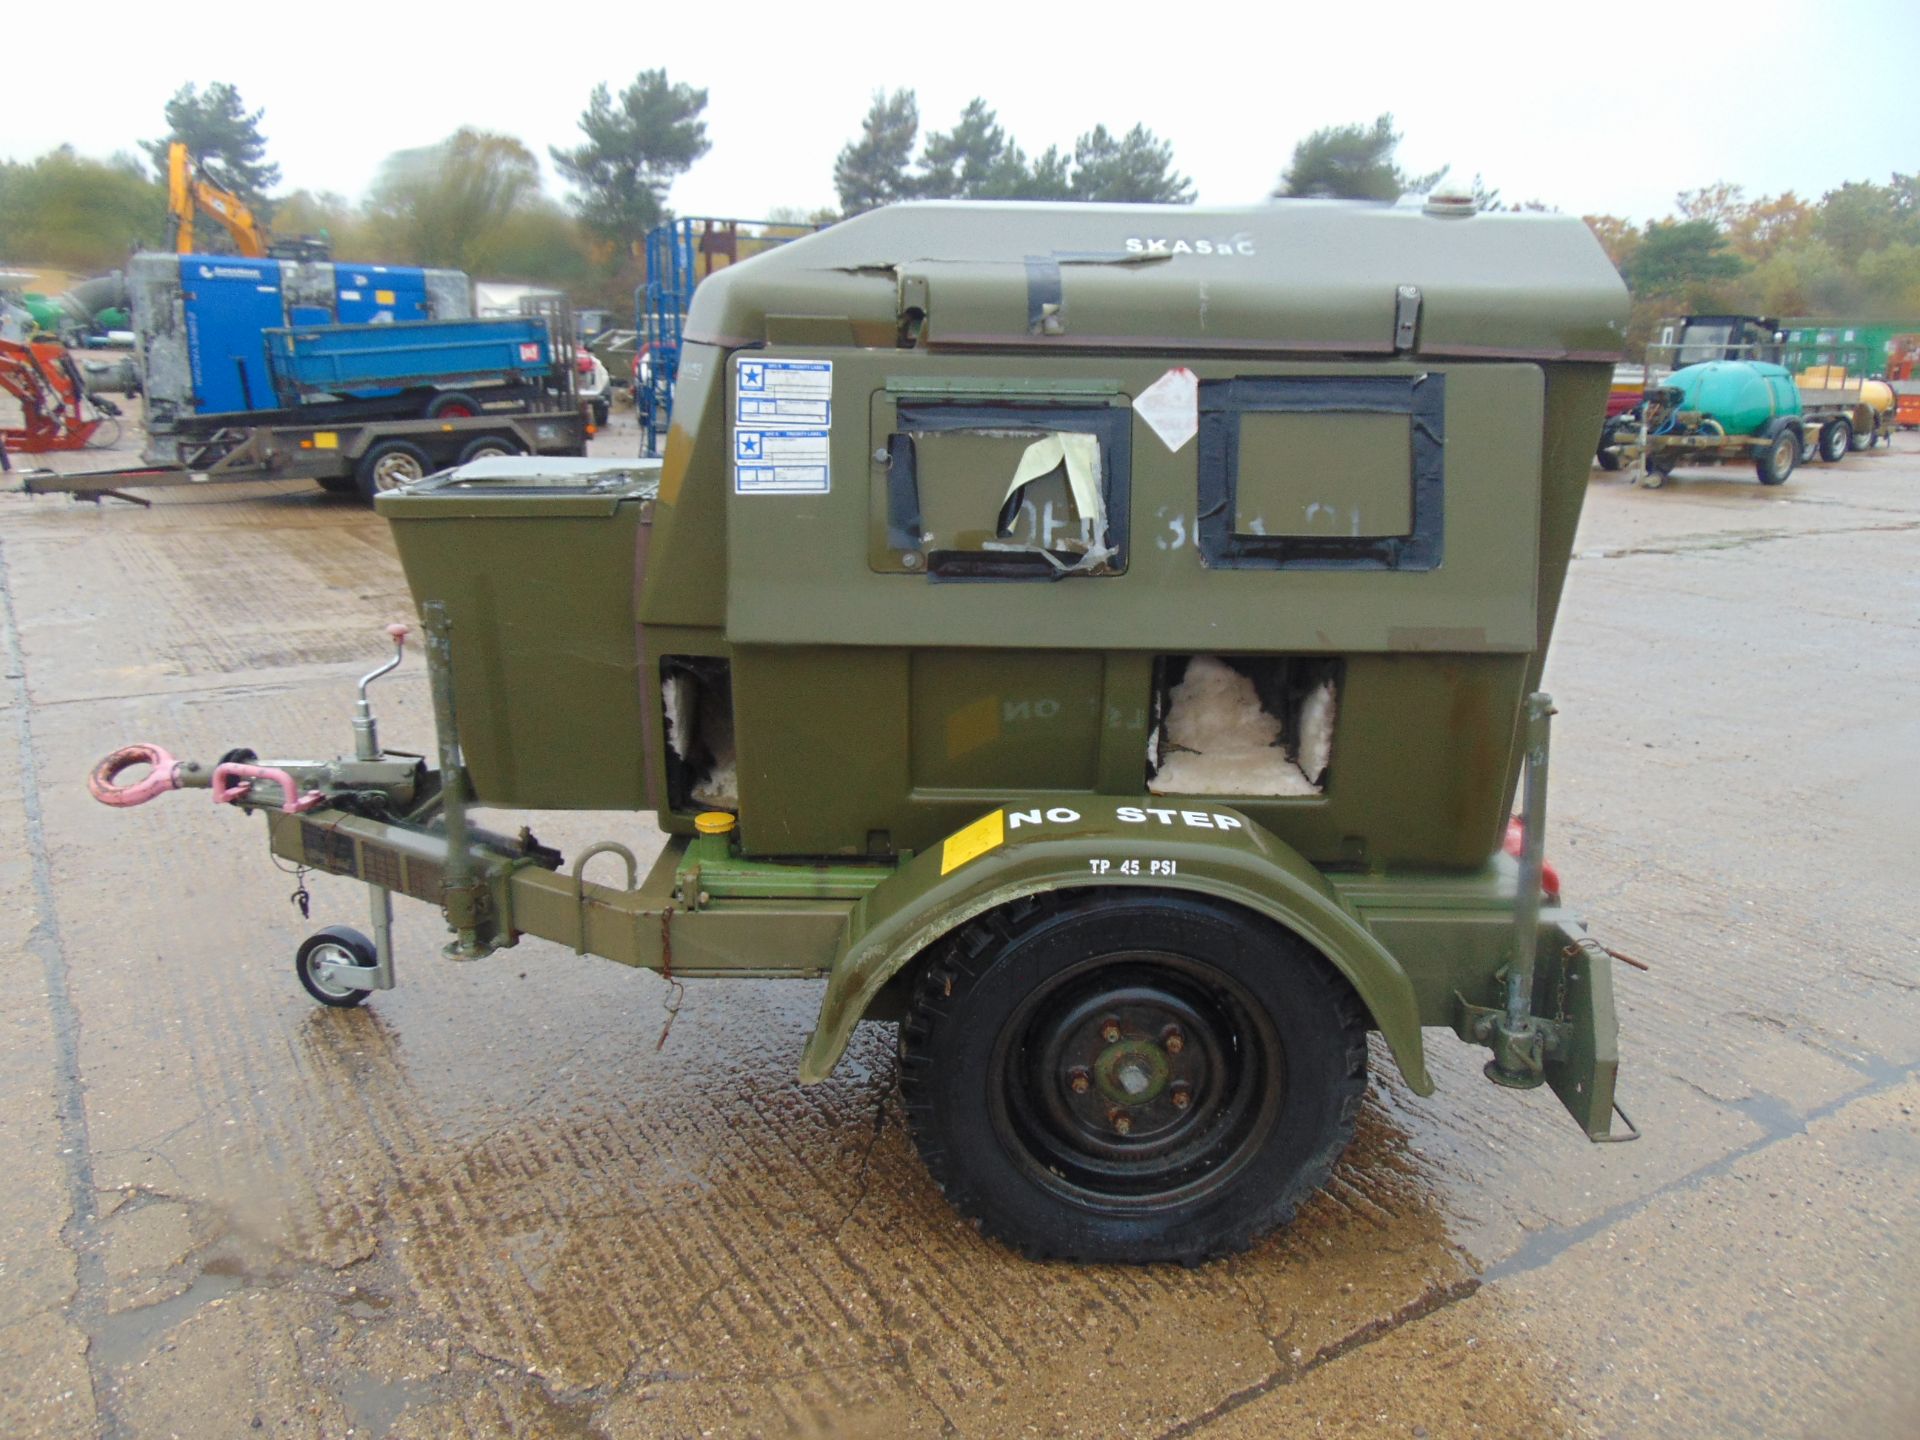 Ex Uk Royal Air Force Trailer Mounted 25 KVA Generator - Image 4 of 15